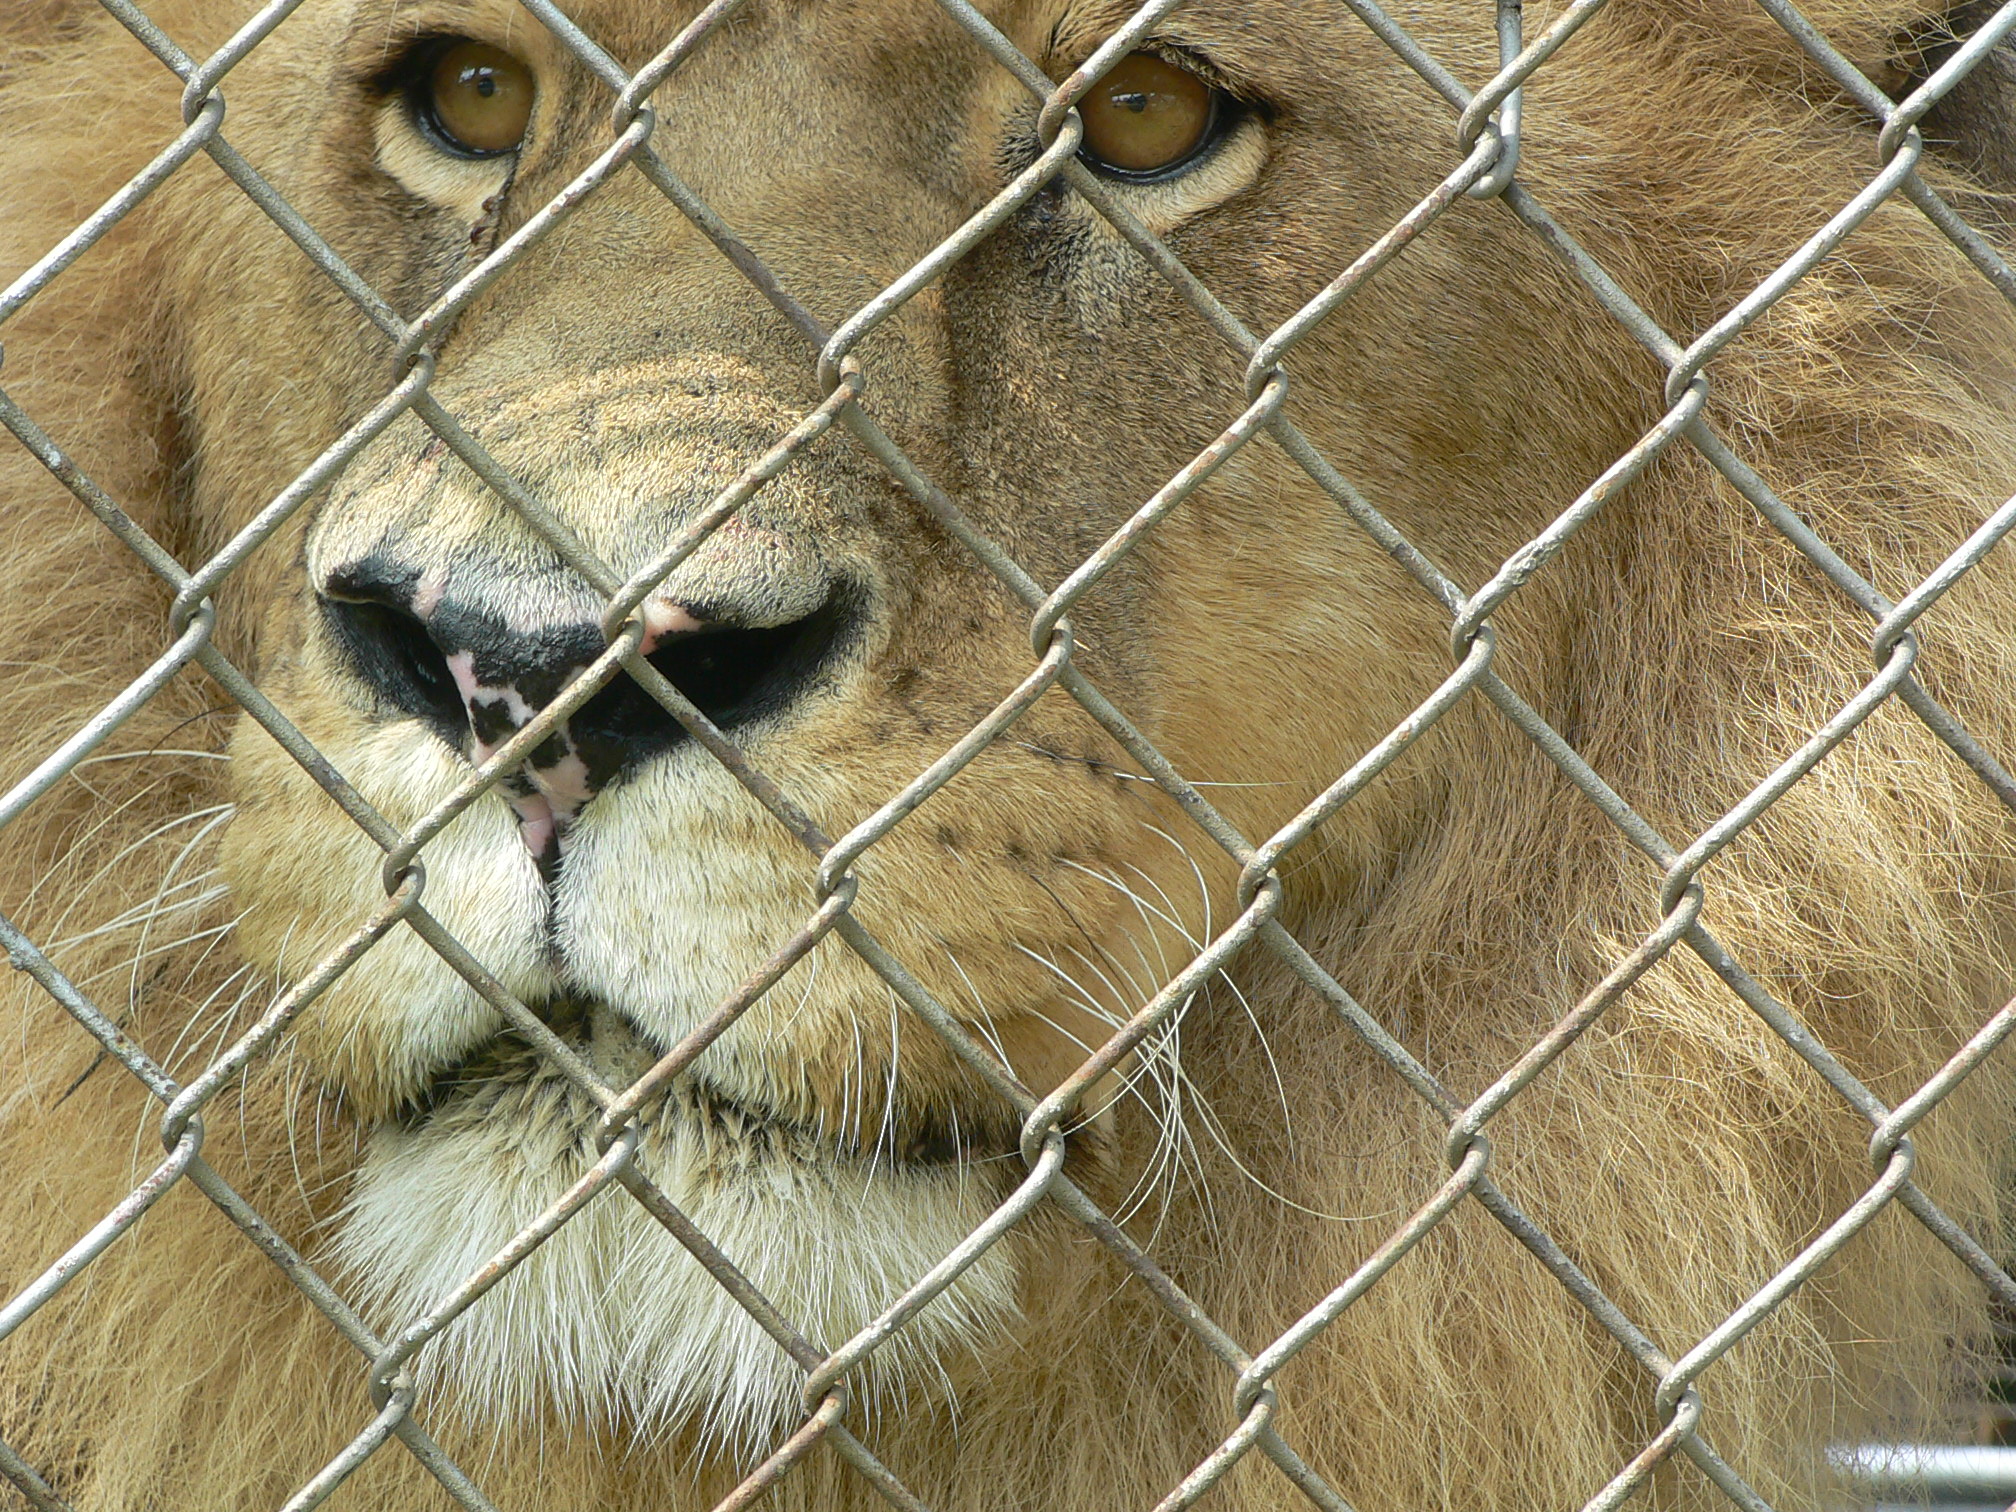 Captive lion behind bars. (Credit: Born Free USA)